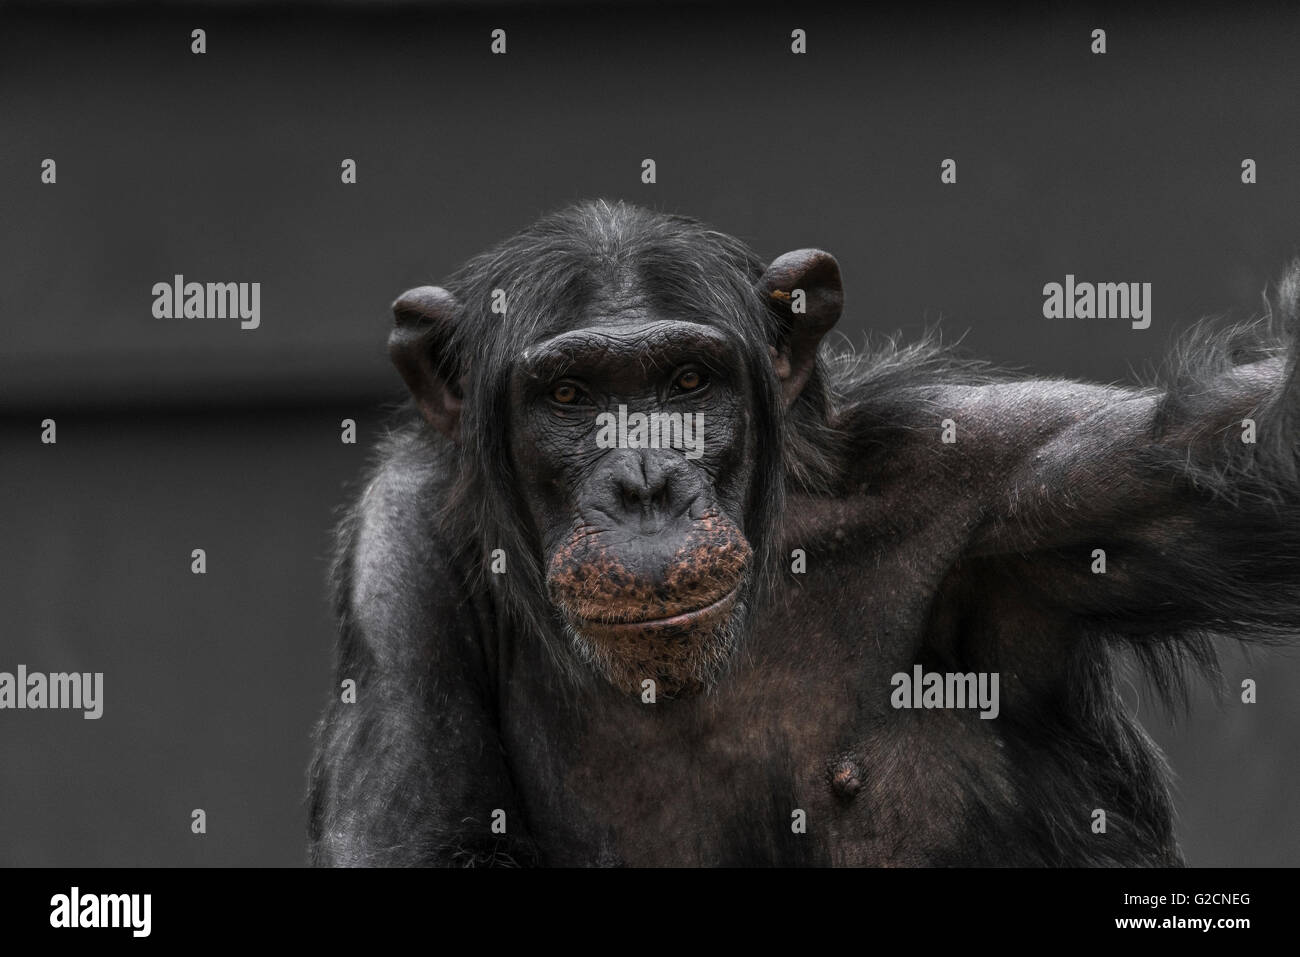 Thinking chimpanzee portrait close up, 2016 Stock Photo